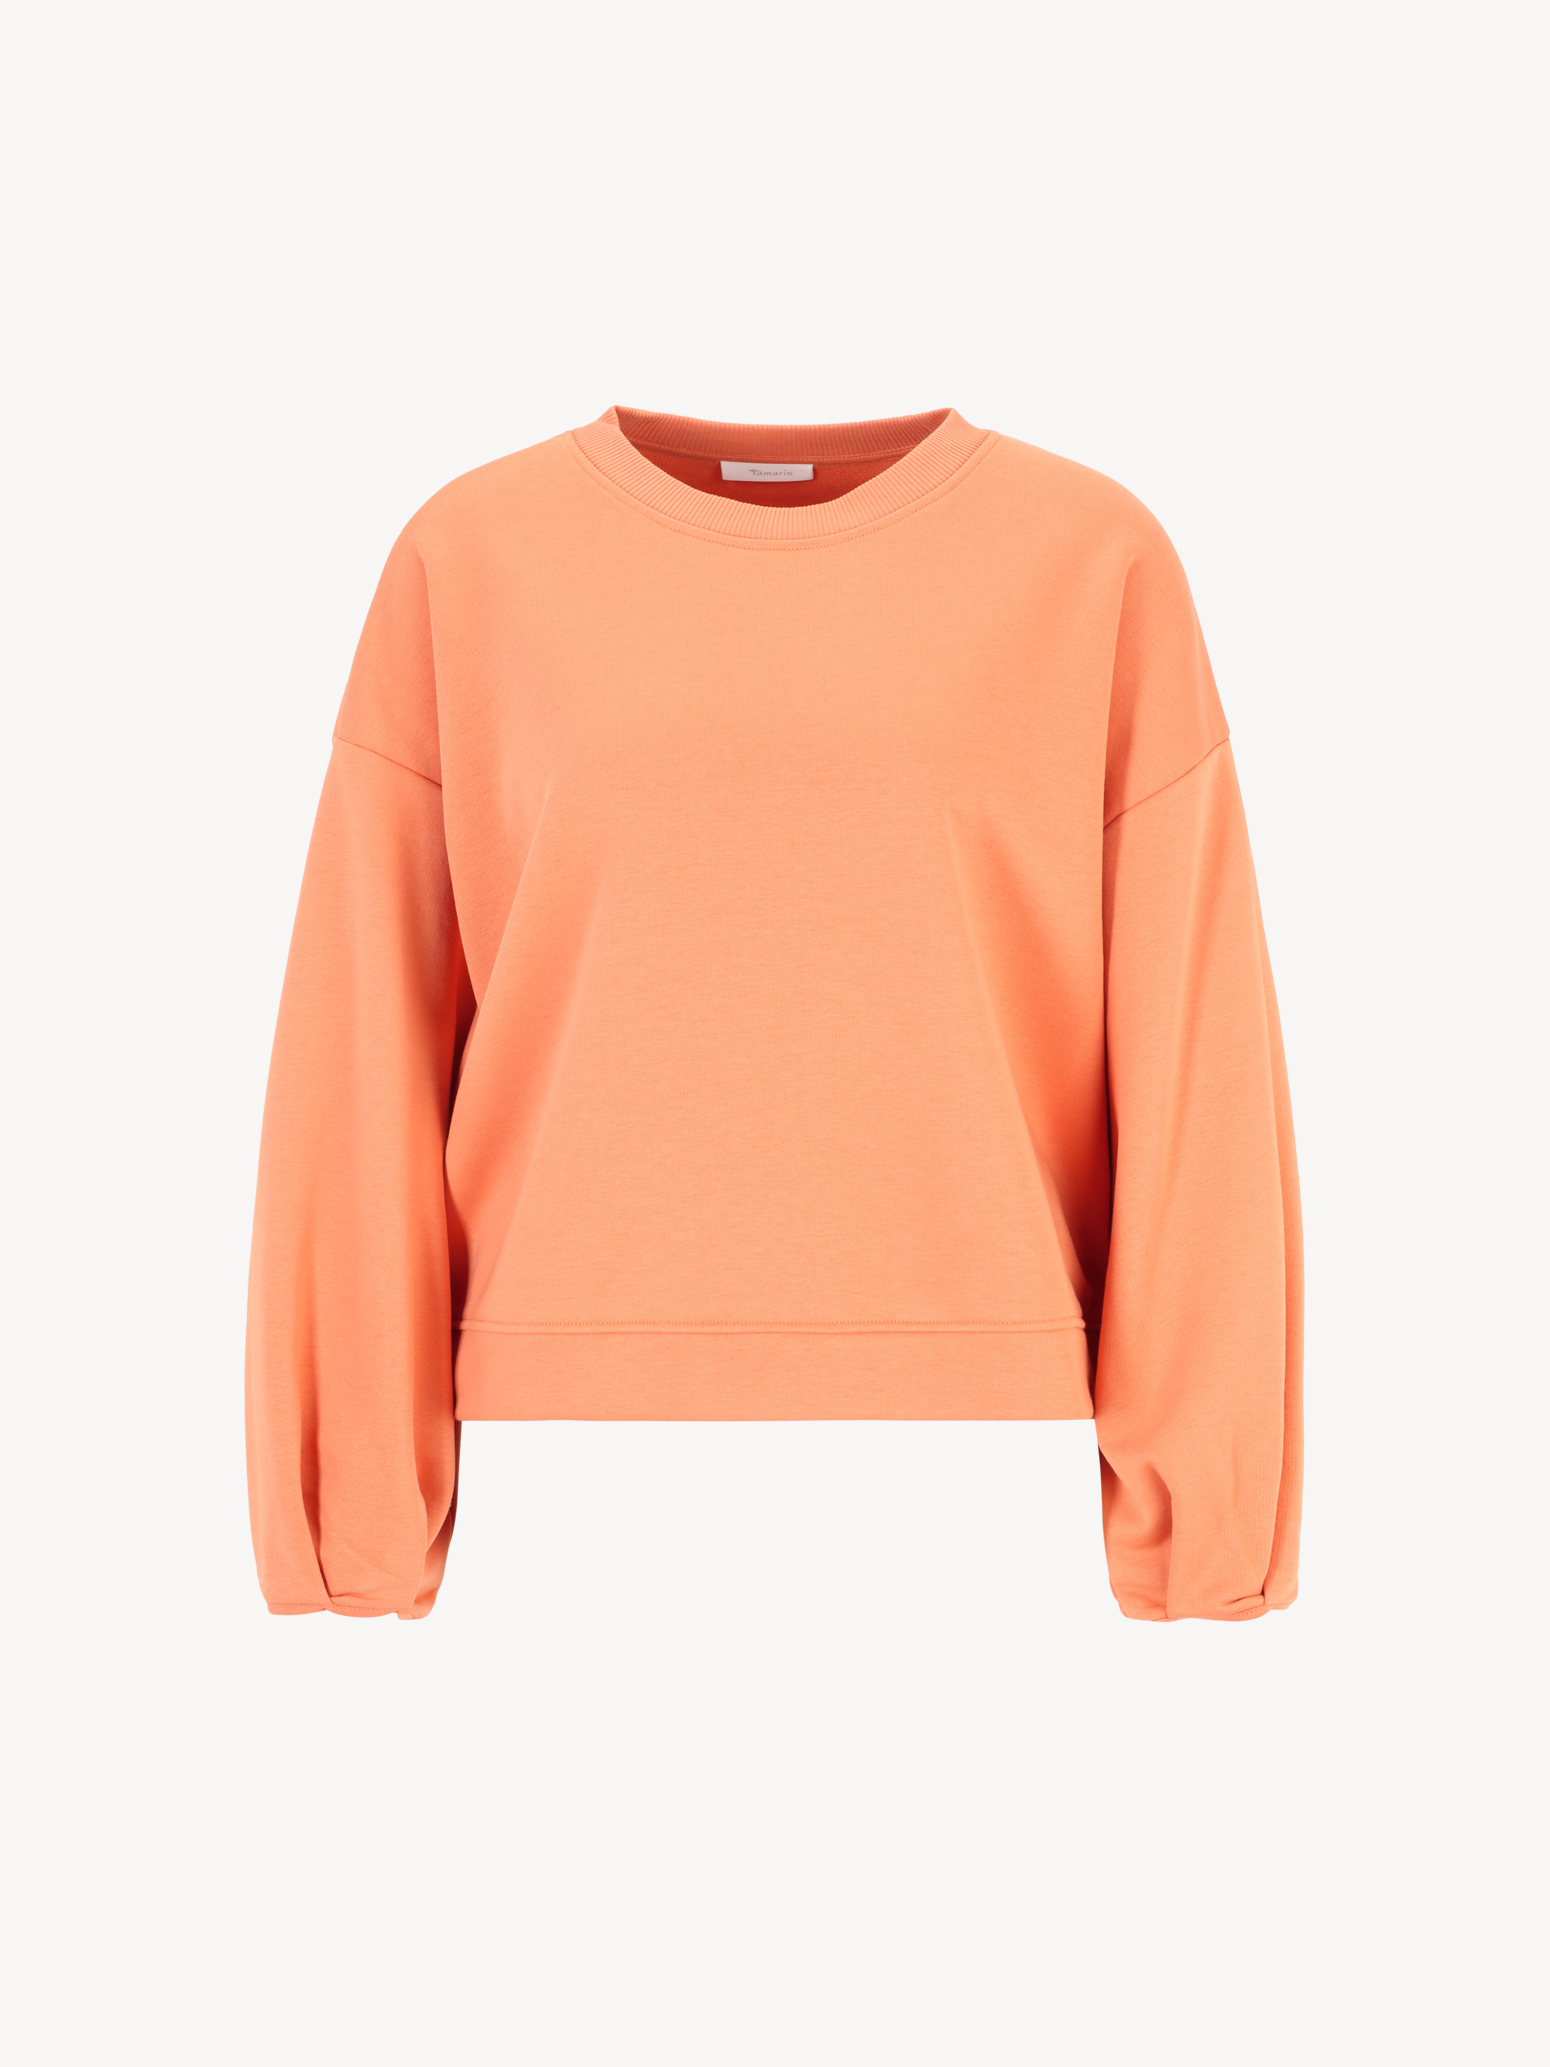 sweat-shirt orange - m